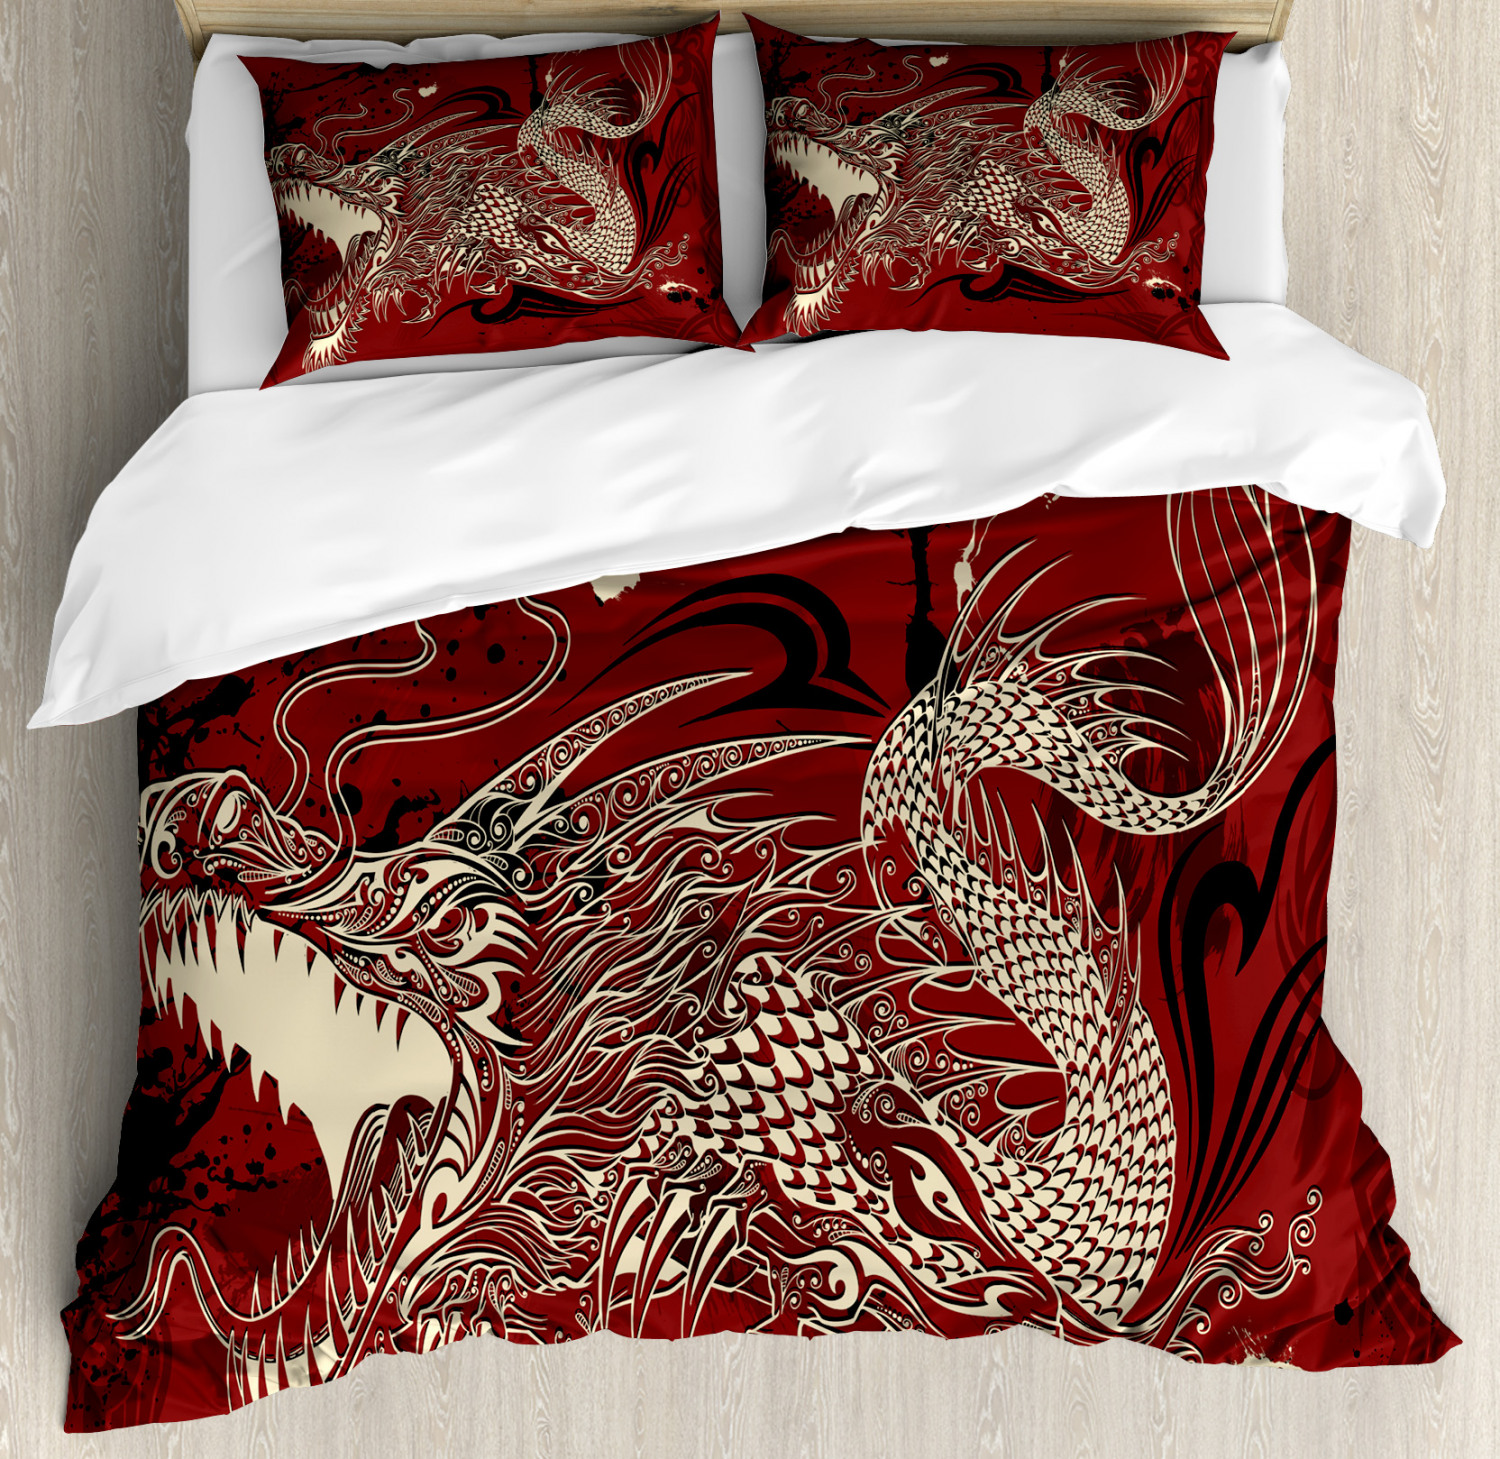 Duvet Cover Set Pillow Shams Dragon Sketch Print | eBay